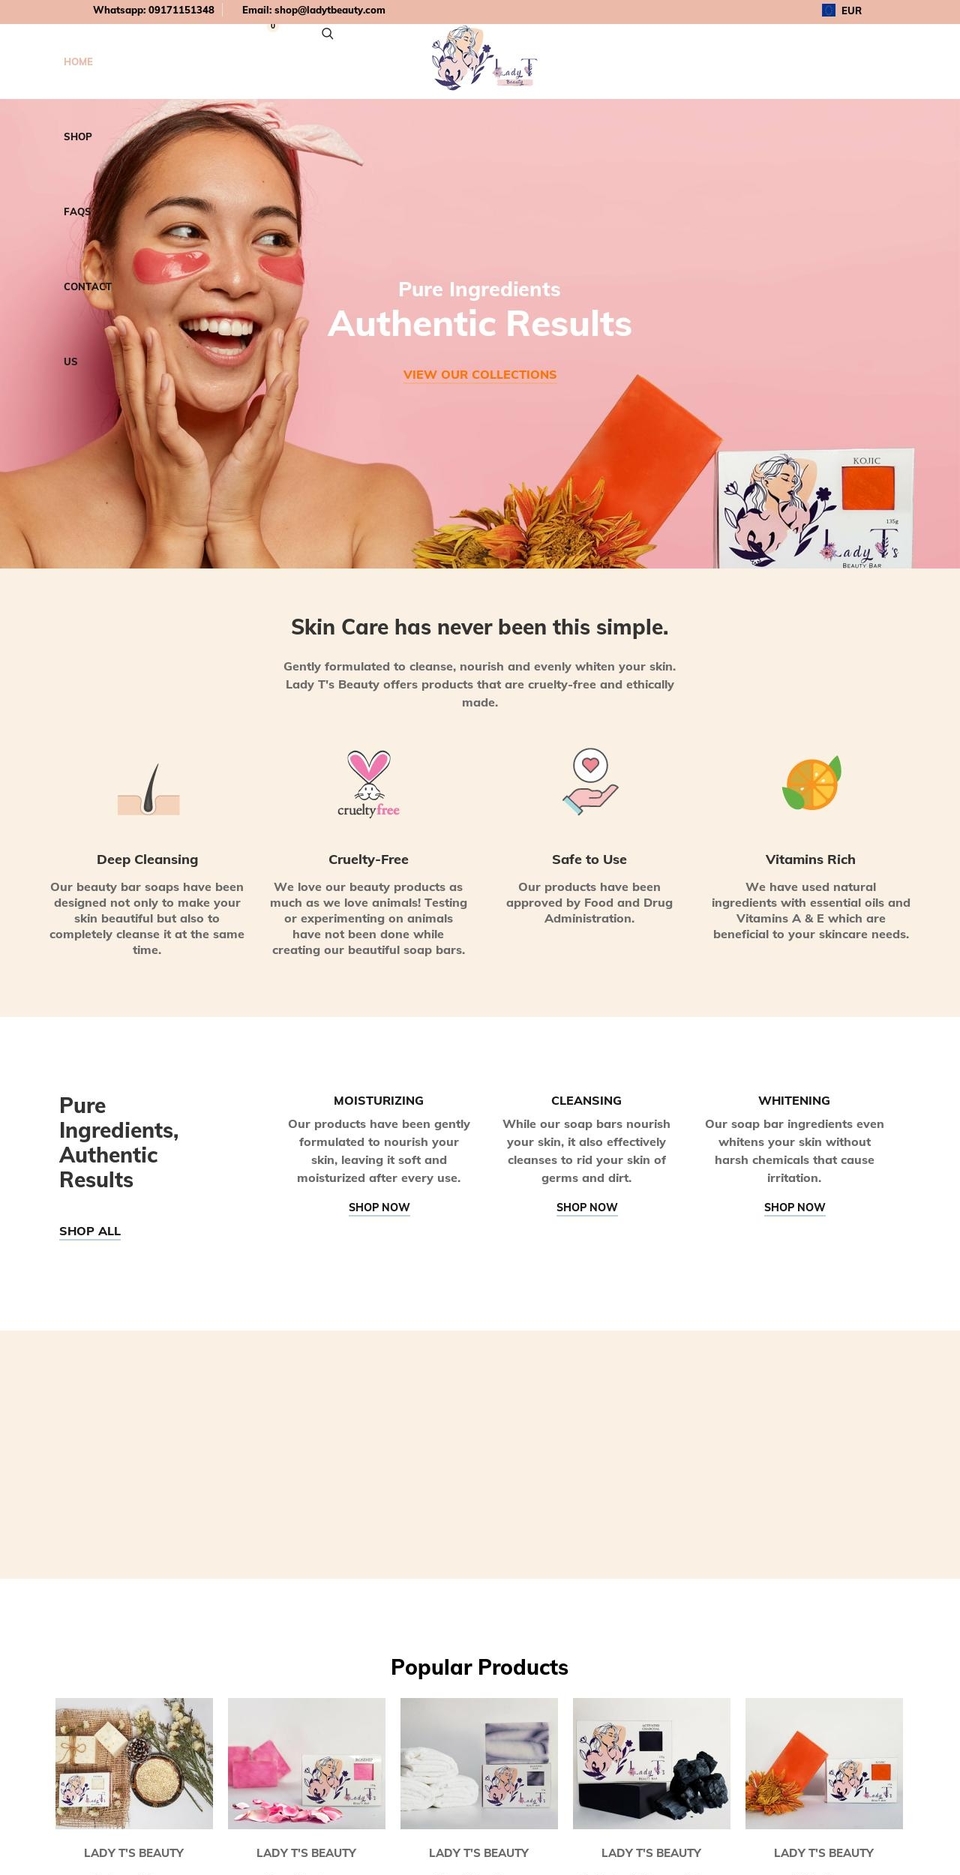 Savon Shopify theme site example ladytbeauty.com